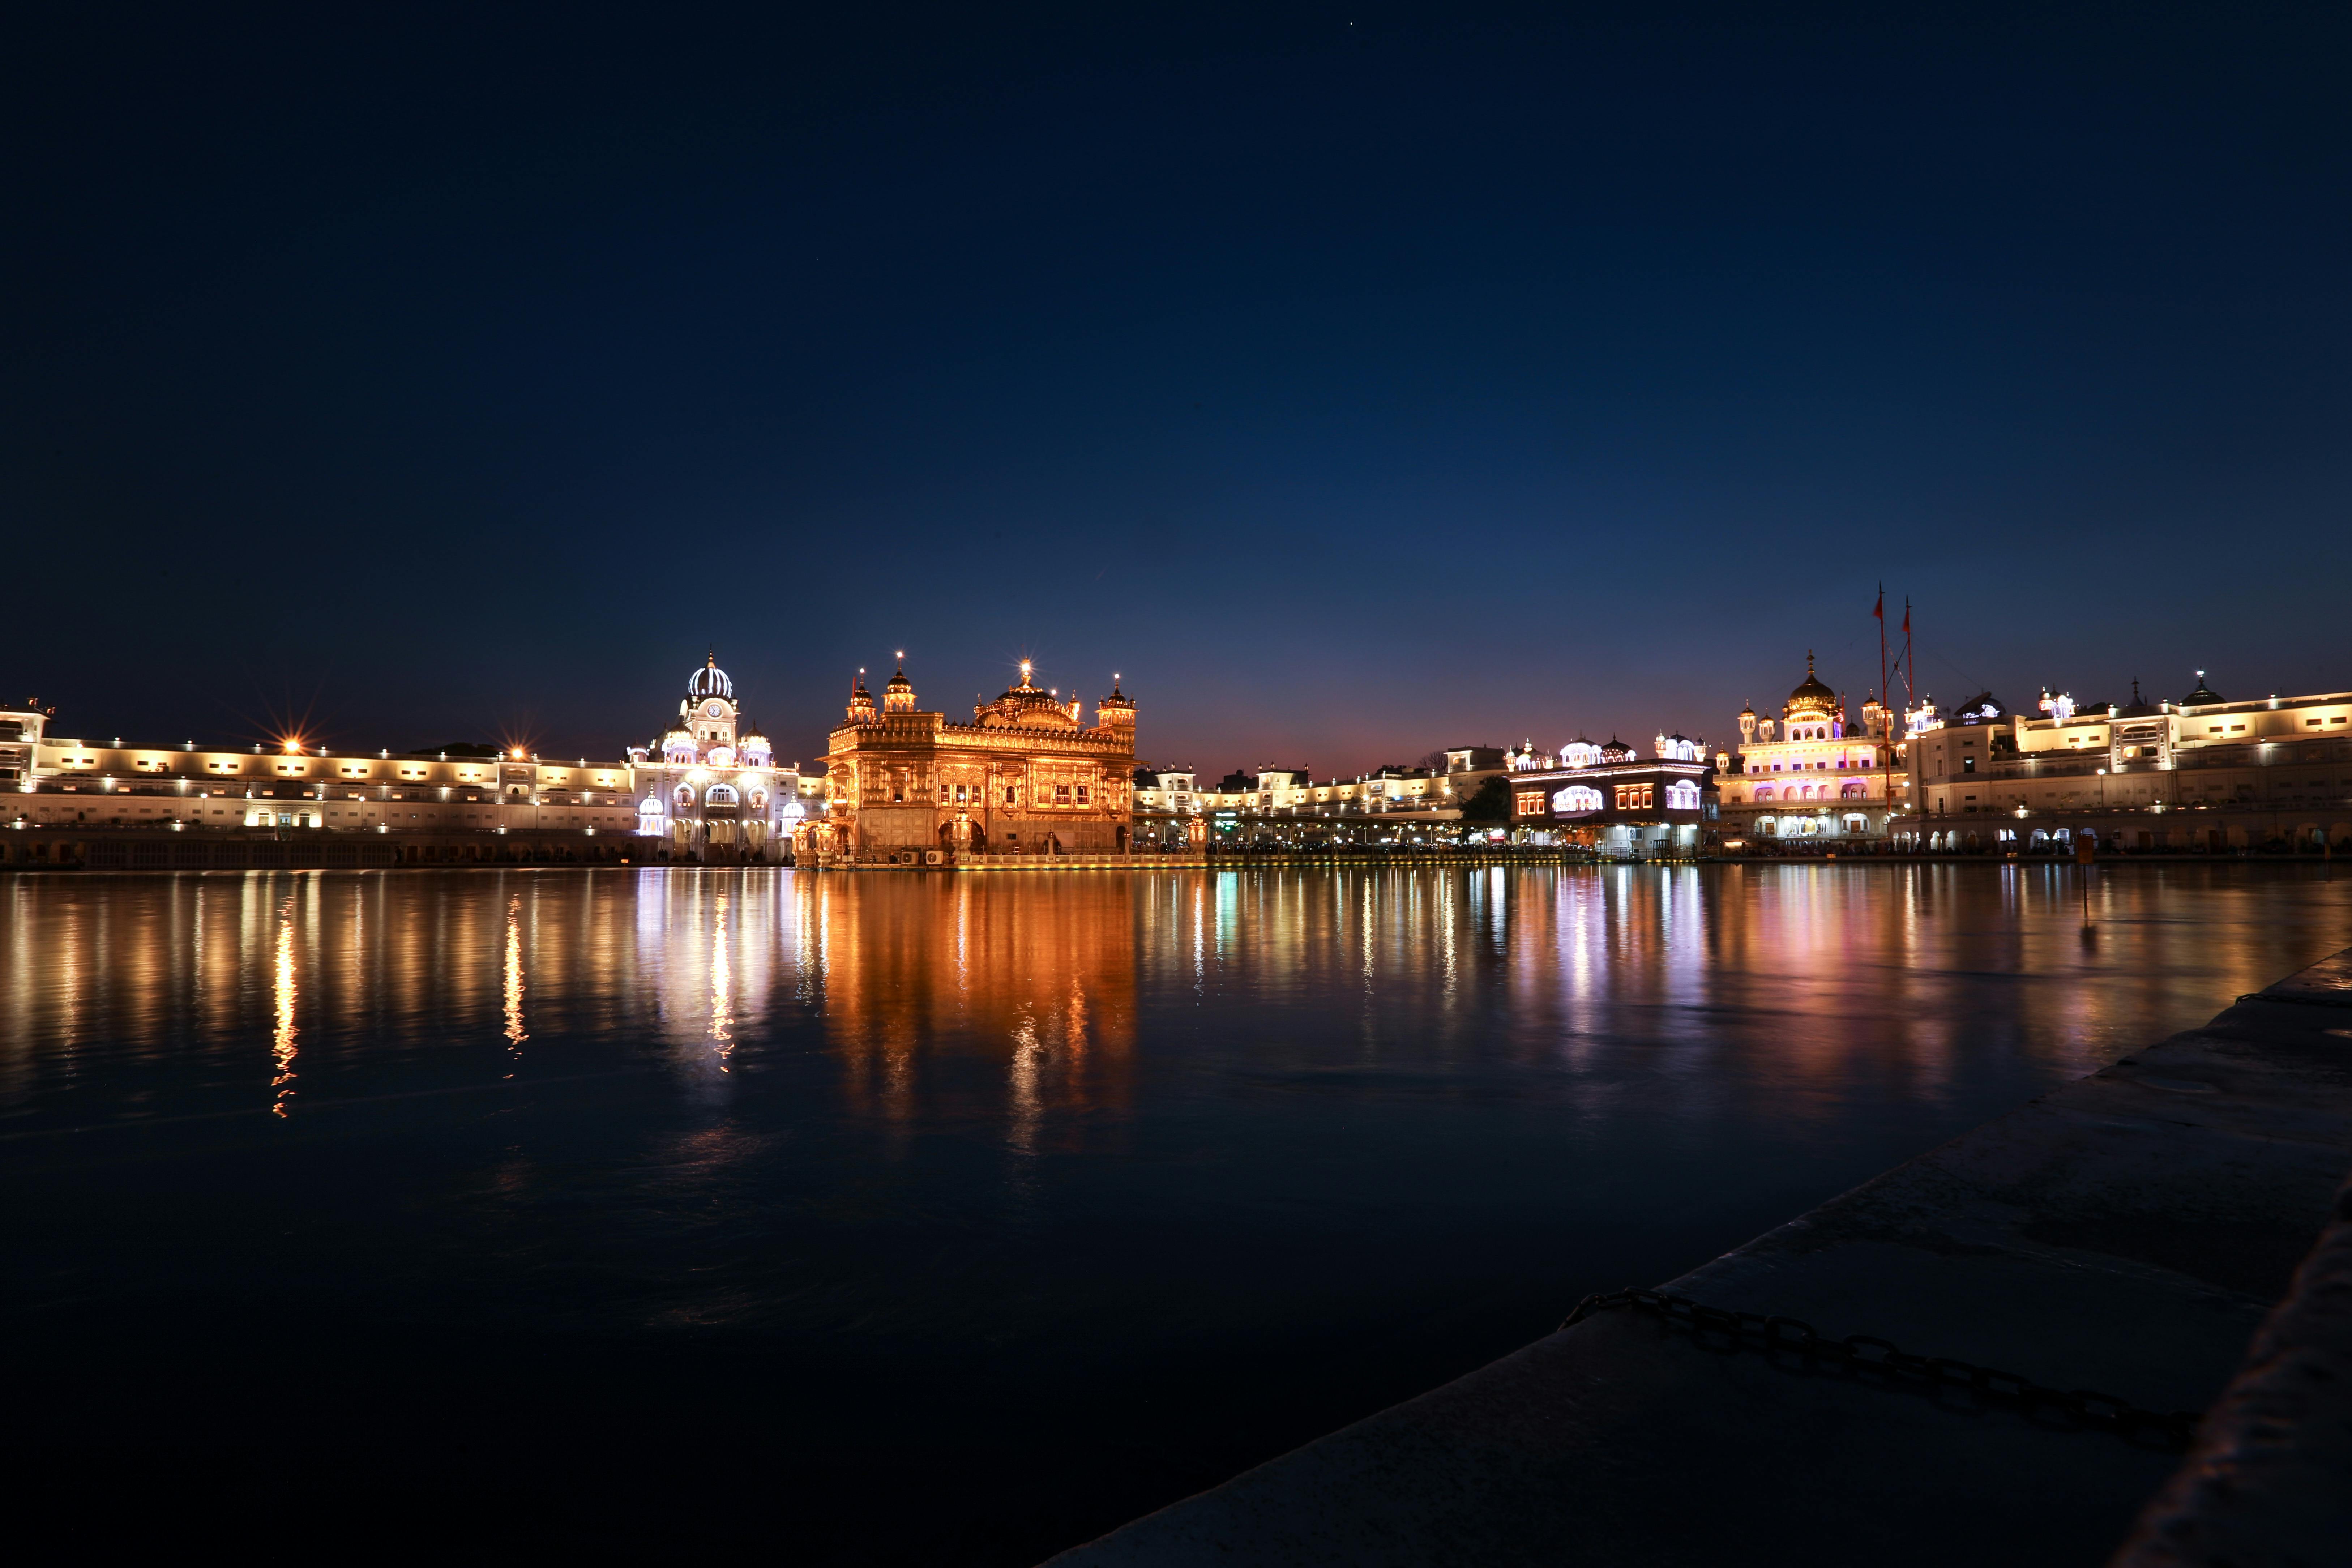 Sikh Gurdwara Photos, Download The BEST Free Sikh Gurdwara Stock Photos & HD  Images